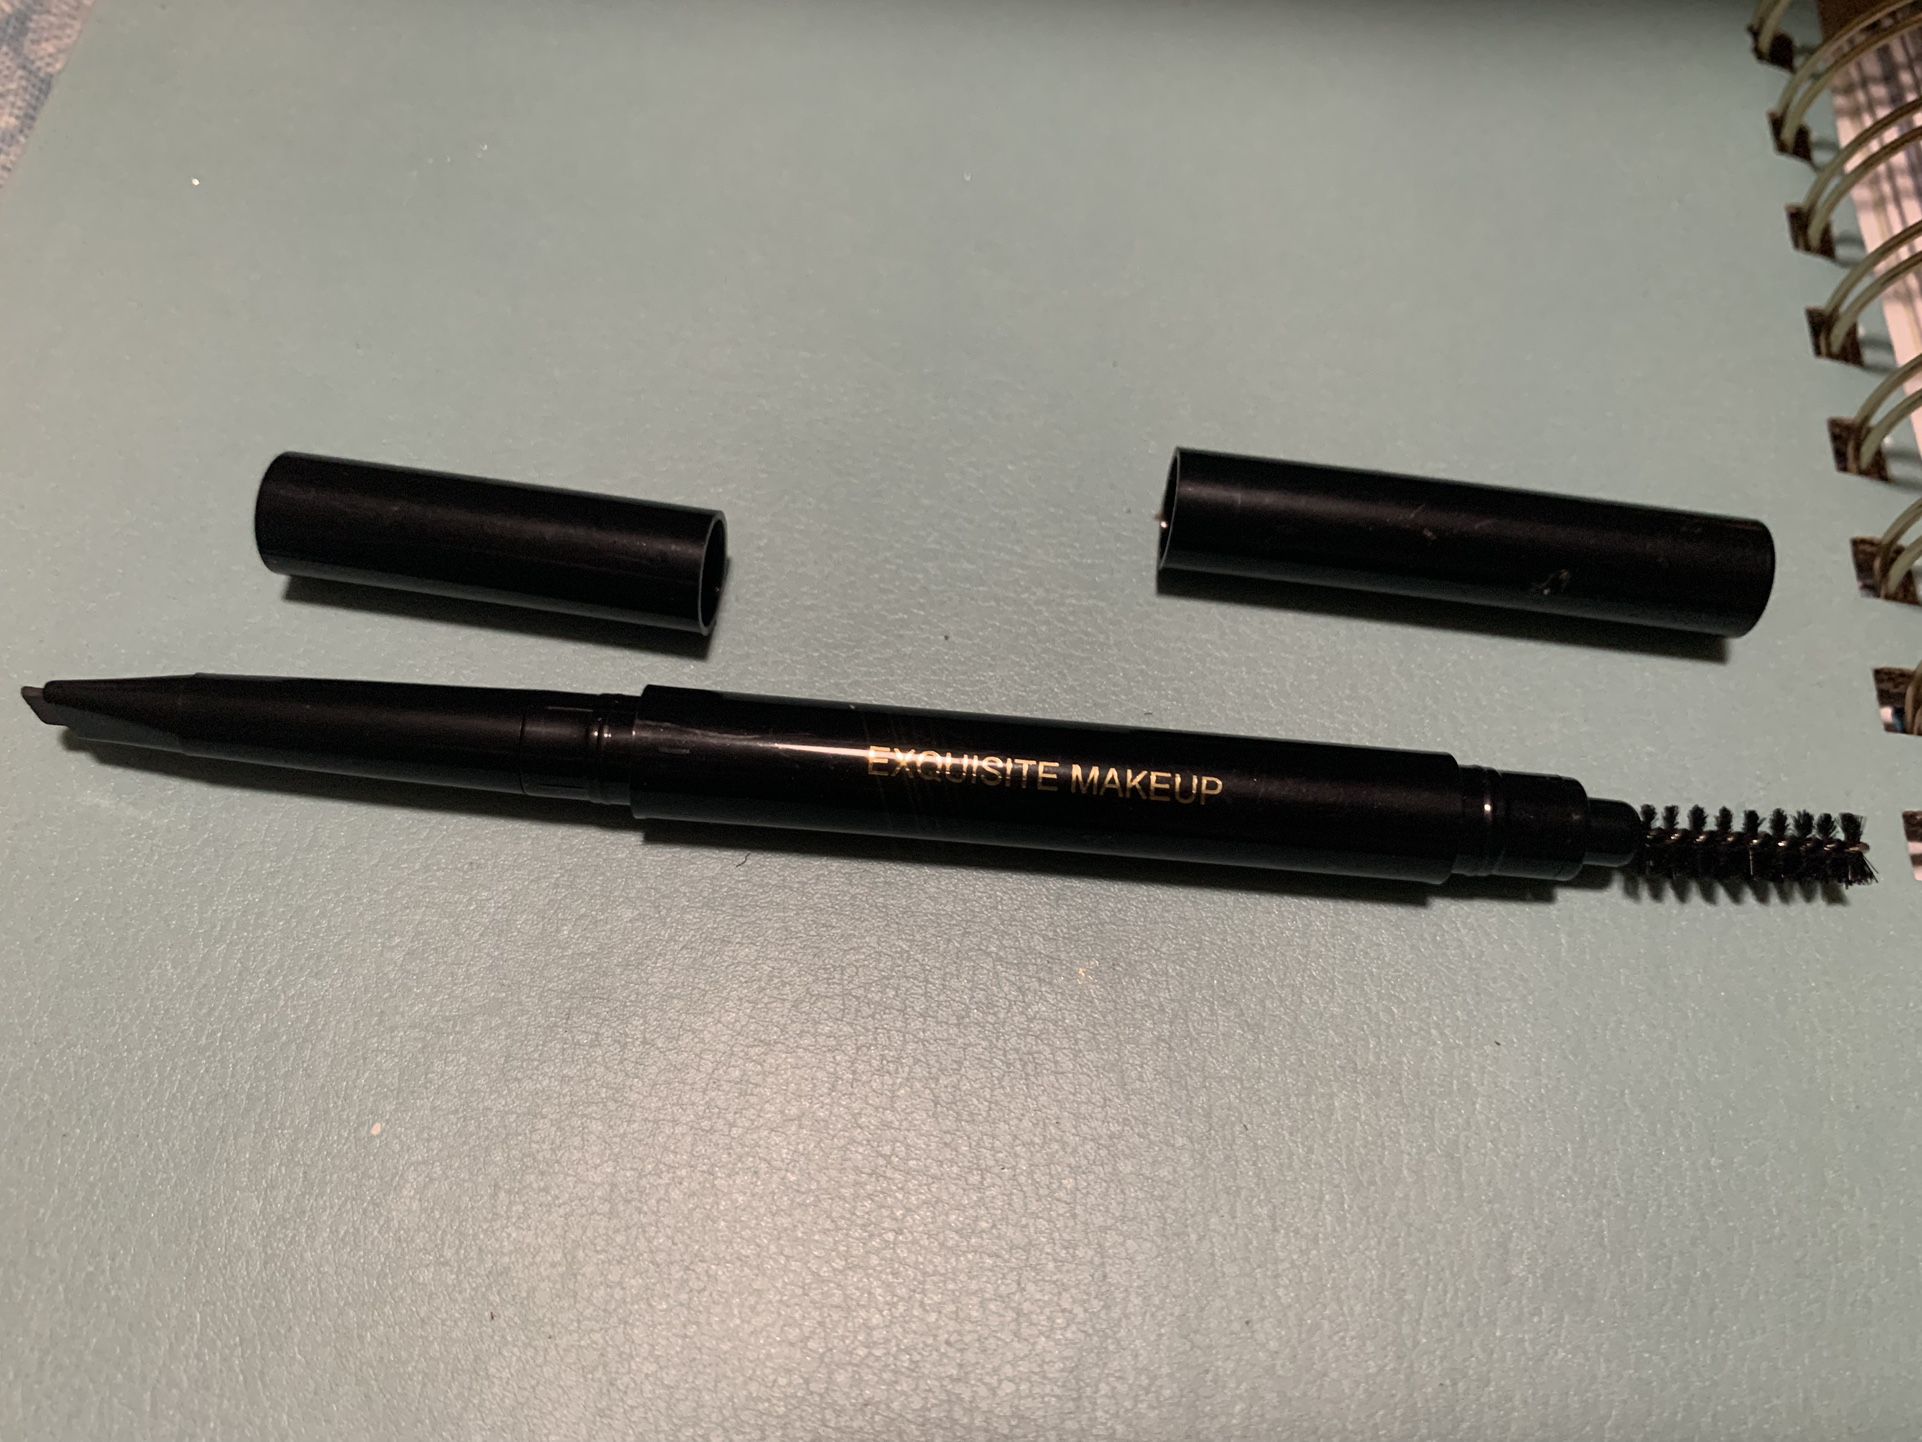 Exquisite Makeup black eyebrow pencil & brush | Lapiz negro para ceja